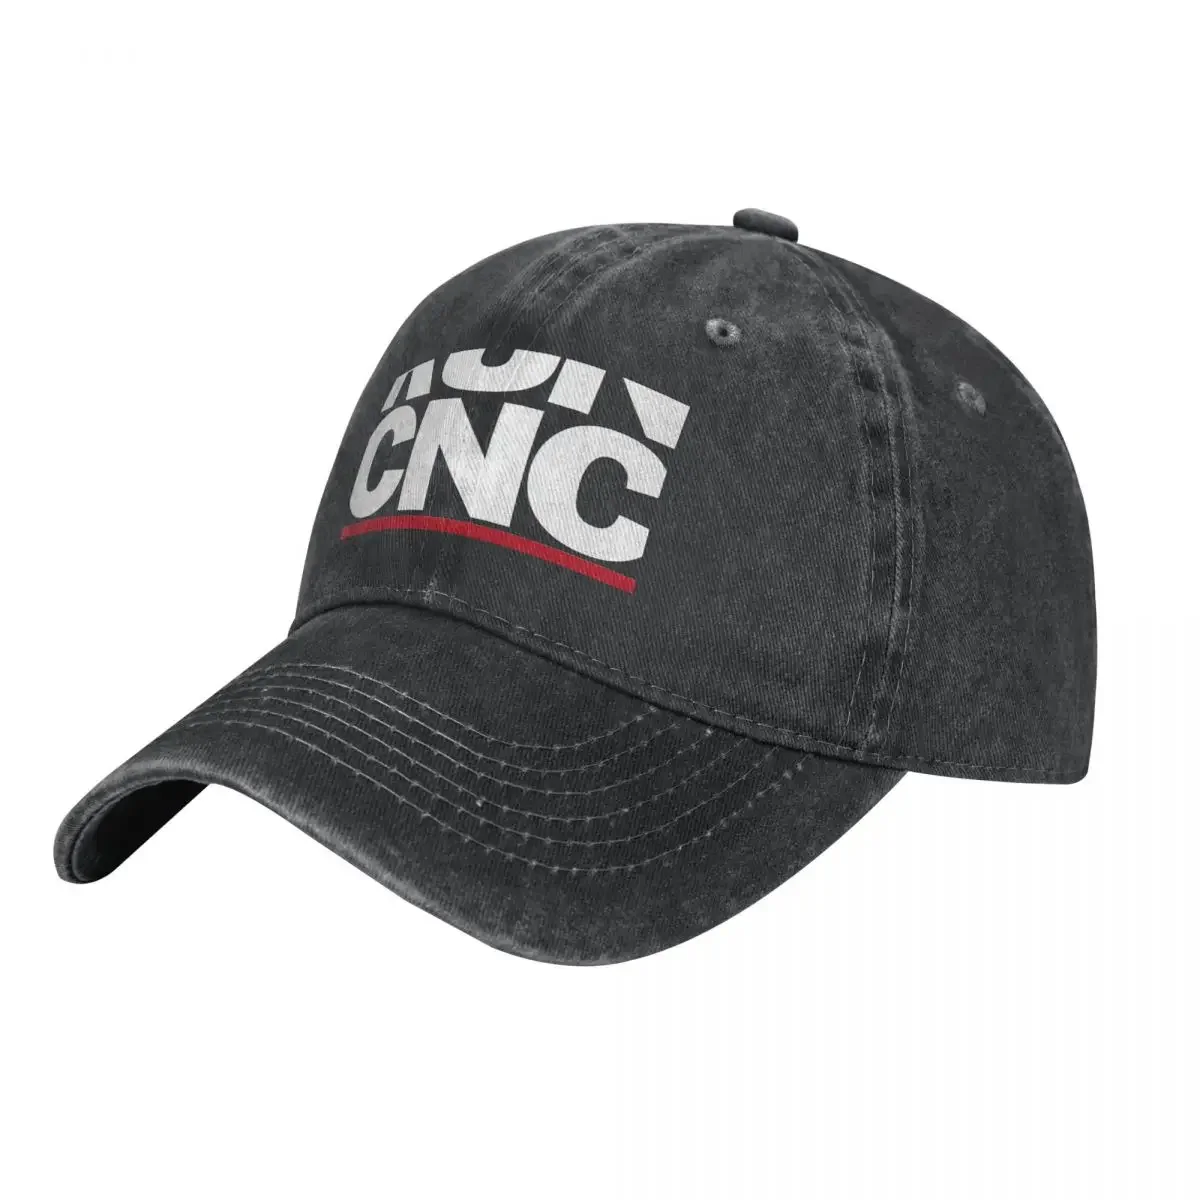 RUN CNC Cowboy Hat Trucker Hat Hat Man Luxury Mens Tennis Women's fashion soft singapore heart flag hat gift dad hat trucker hat cowboy hat